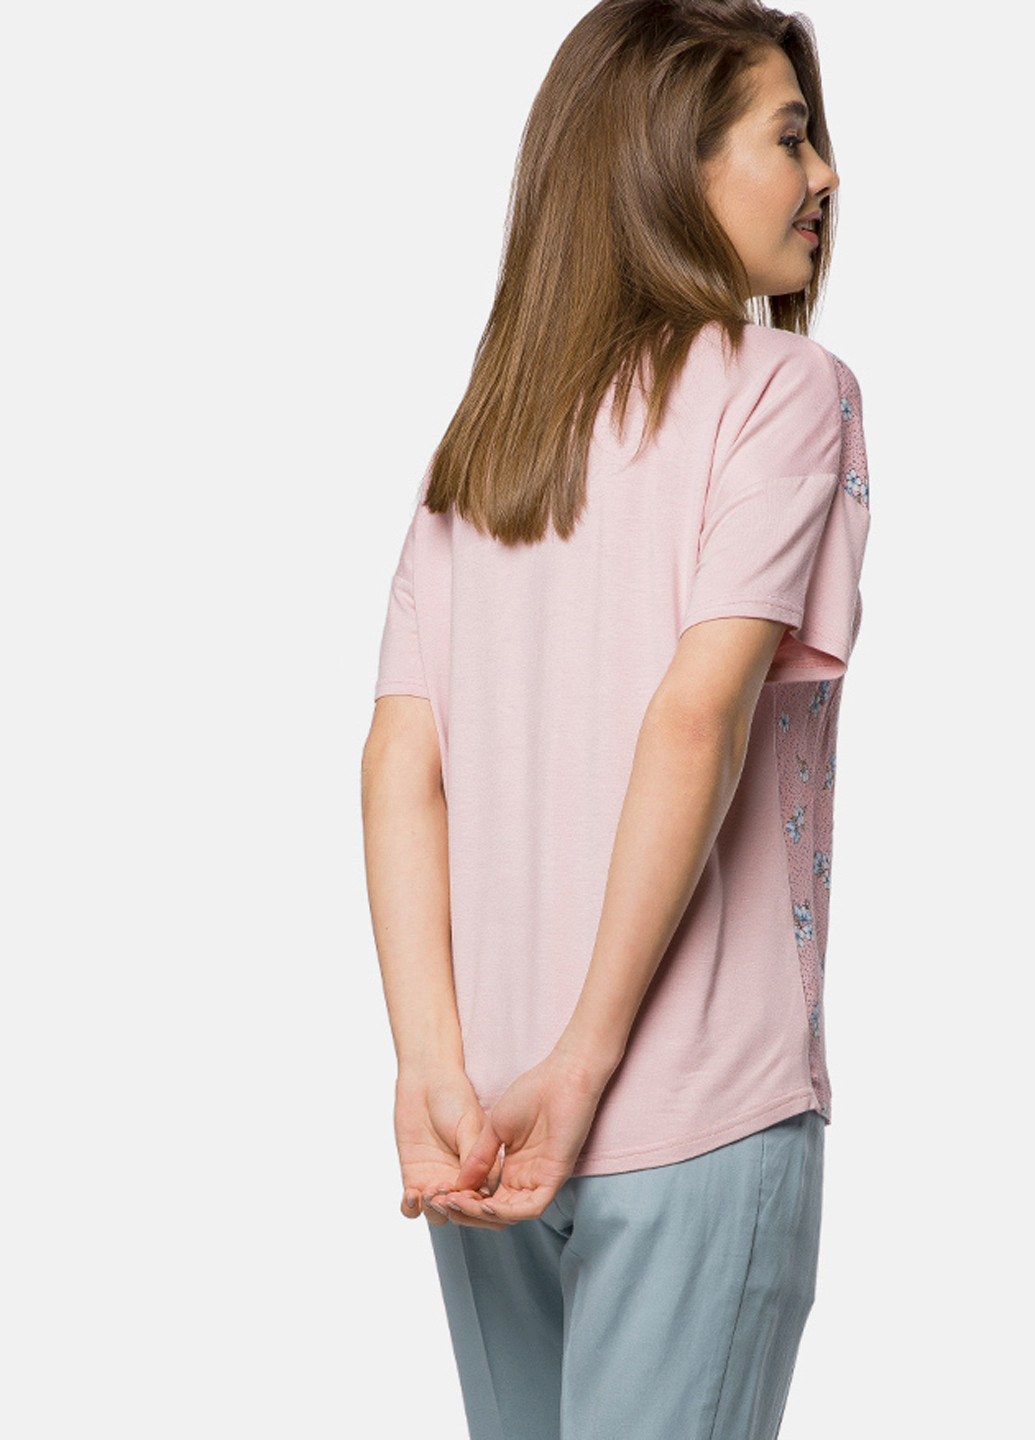 Розовая летняя футболка MR 520